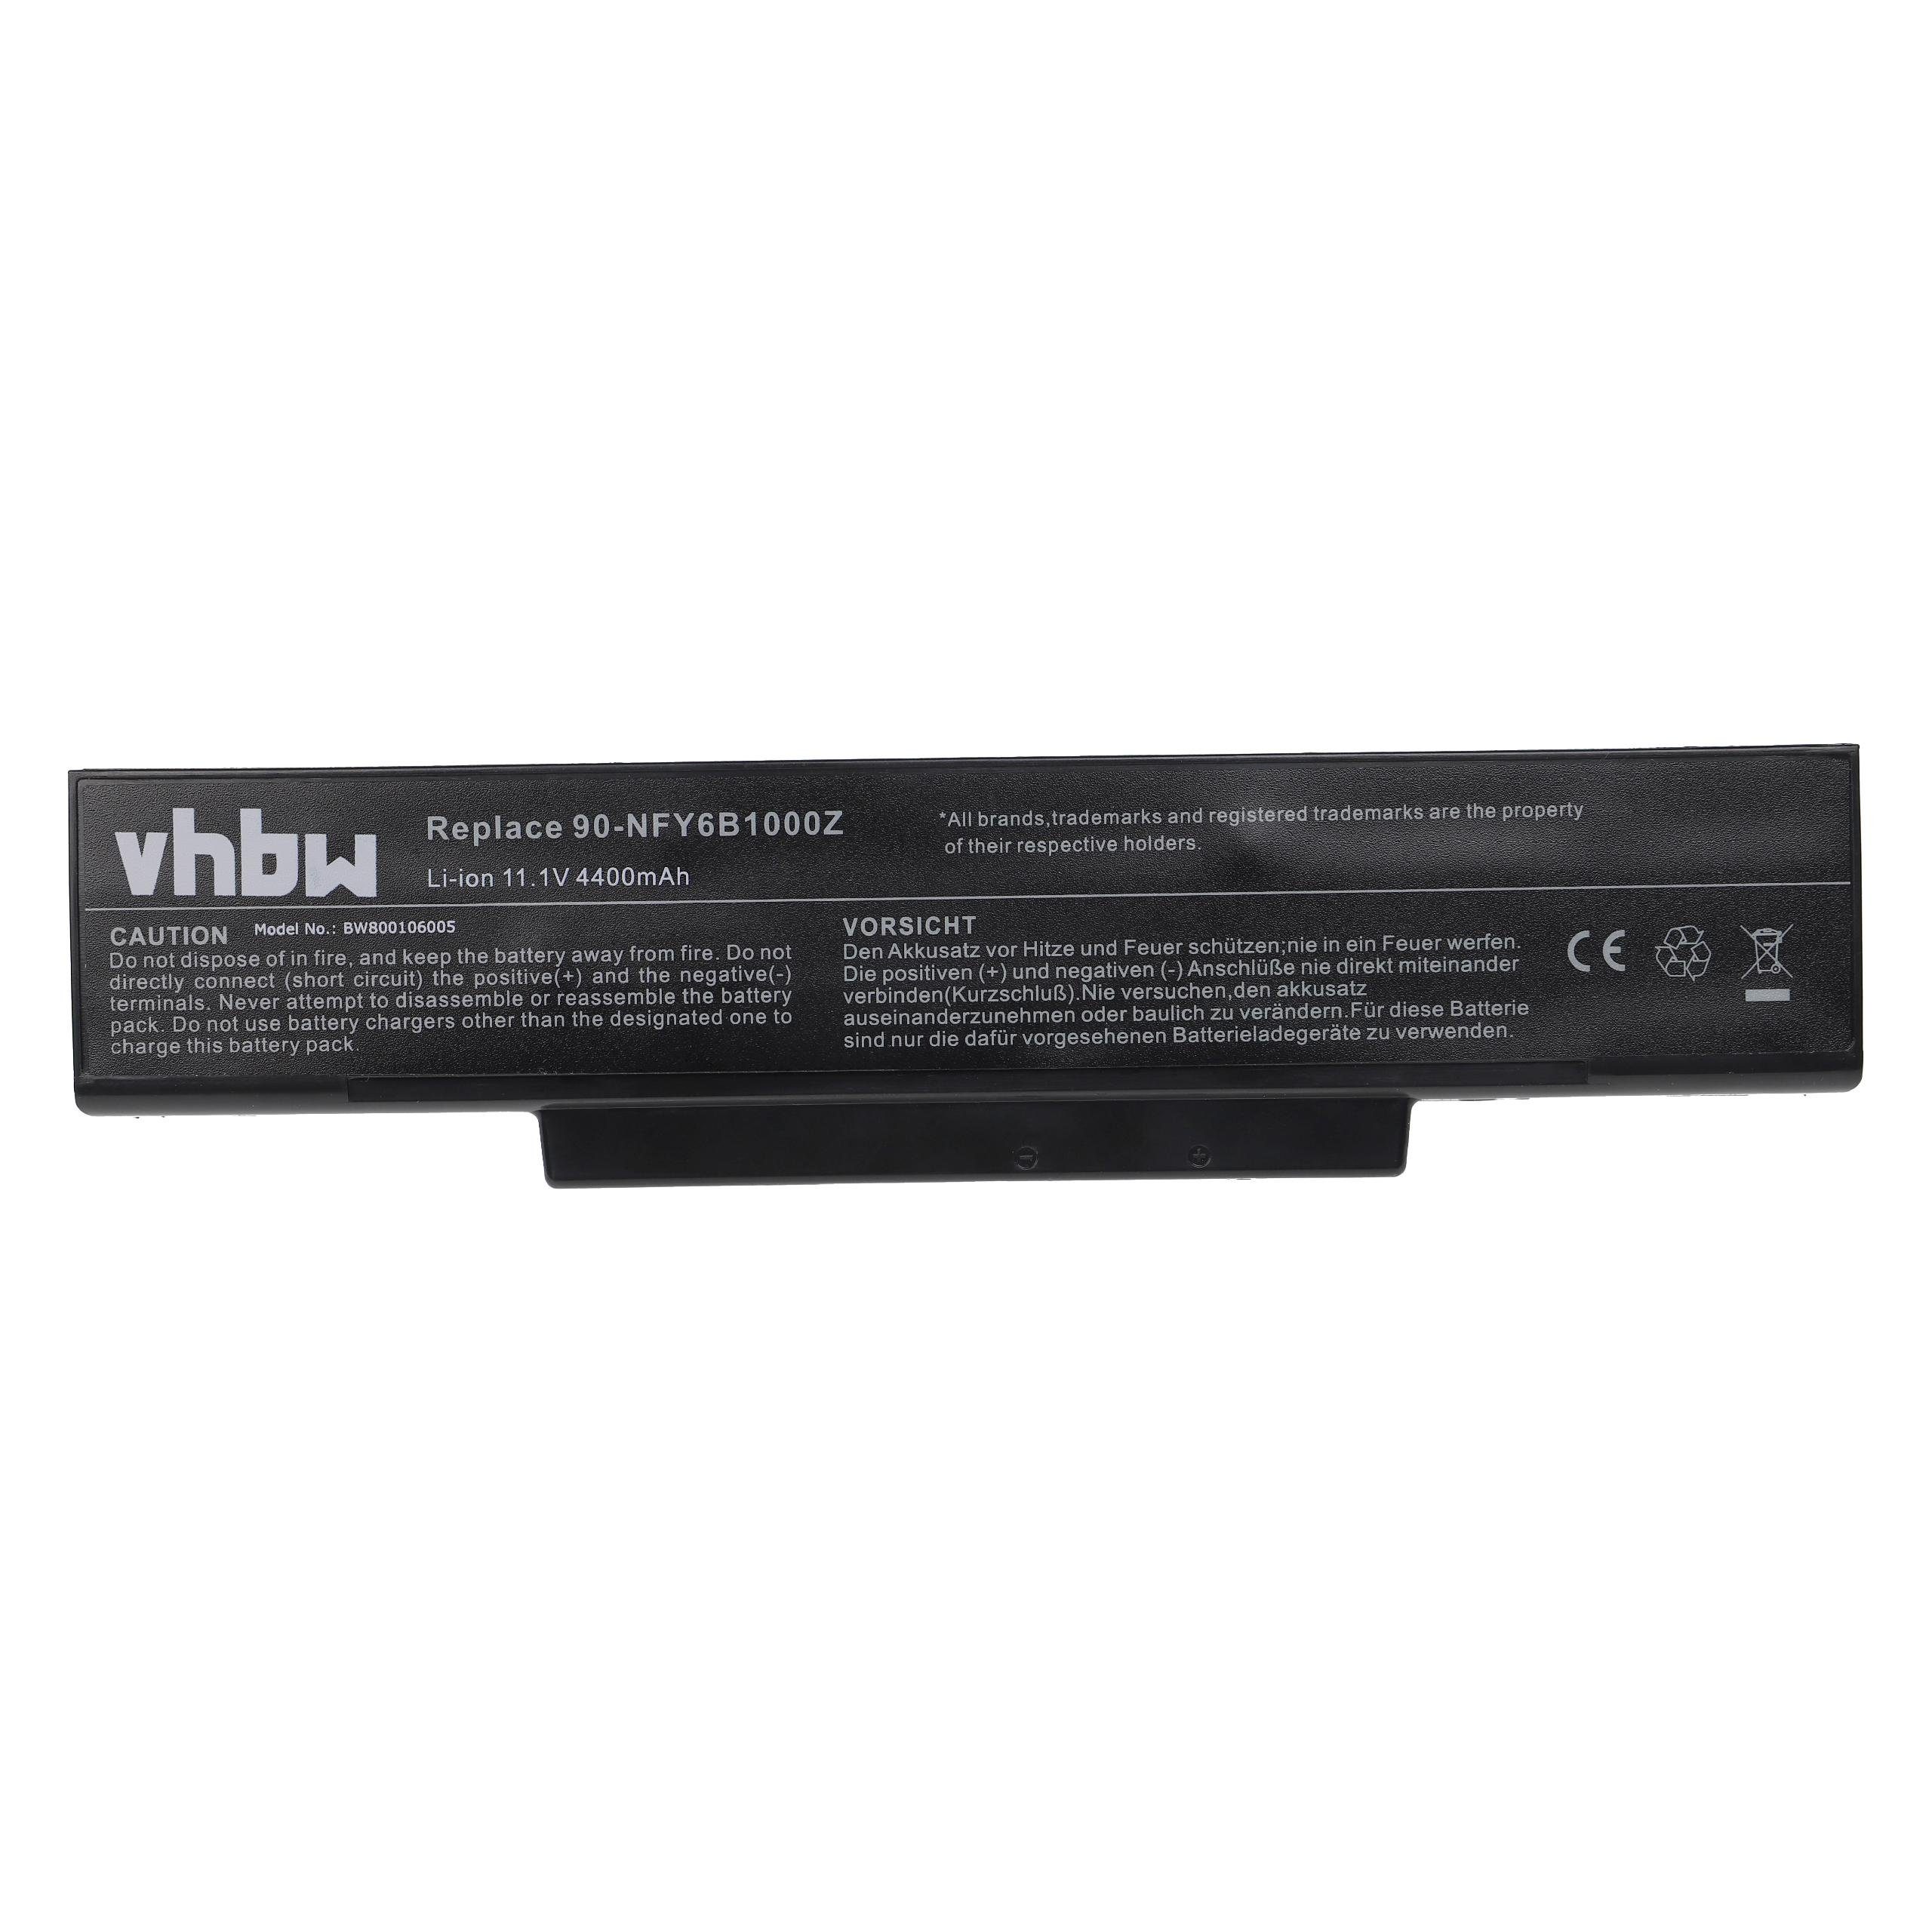 vhbw passend für MSI Megabook 4400 M660, mAh M655, M662, GX740X, Laptop-Akku M677, M670, M673